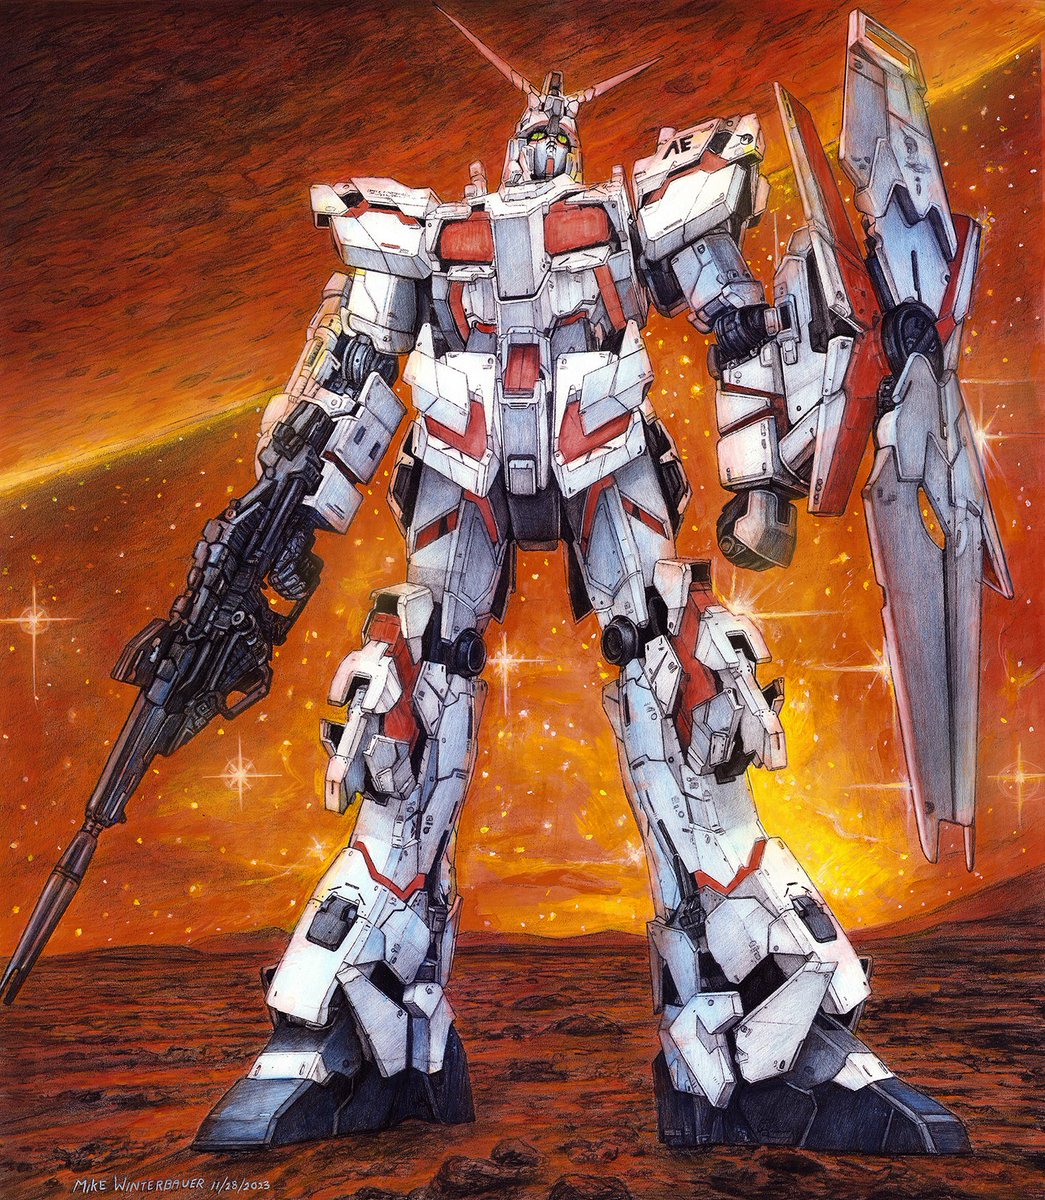 My cool Unicorn Gundam painting 2023!
#illustration #popculture #movieart #gundam